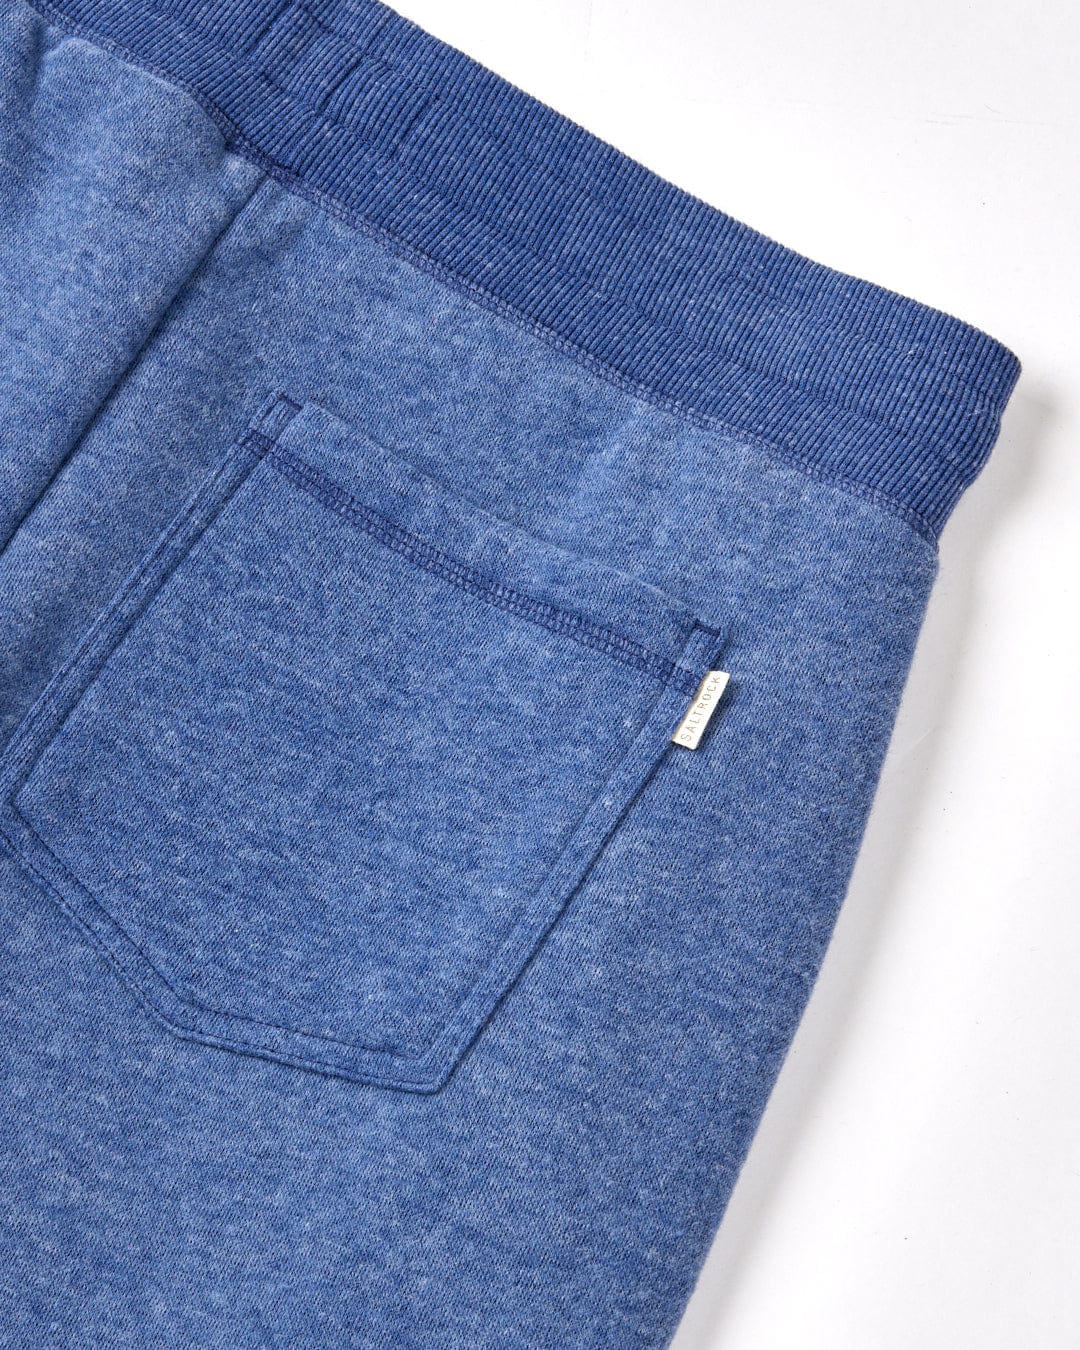 The back pocket of a blue Saltrock Velator Womens Jogger - Navy sweatpants.